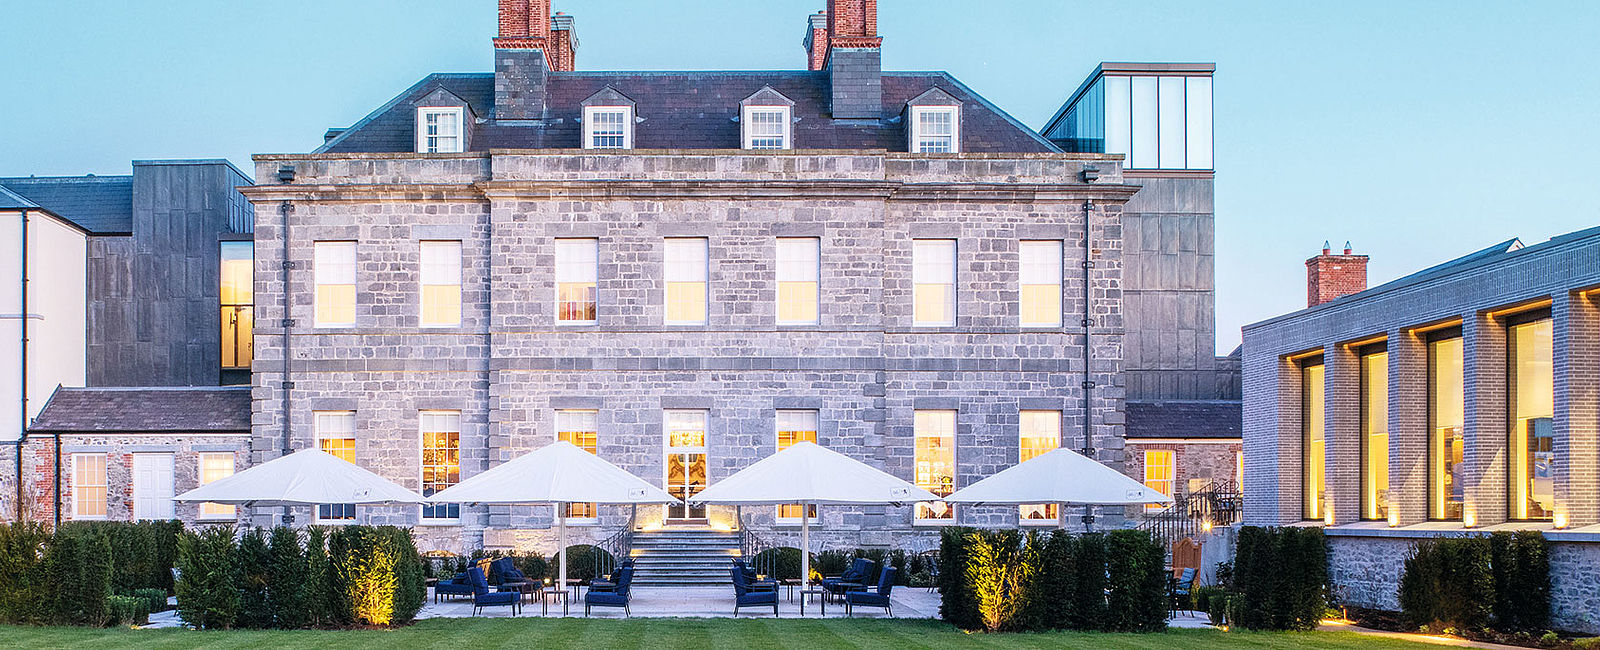 HOTEL ANGEBOTE
 Cashel Palace Hotel: Golden Autumn Stays 
